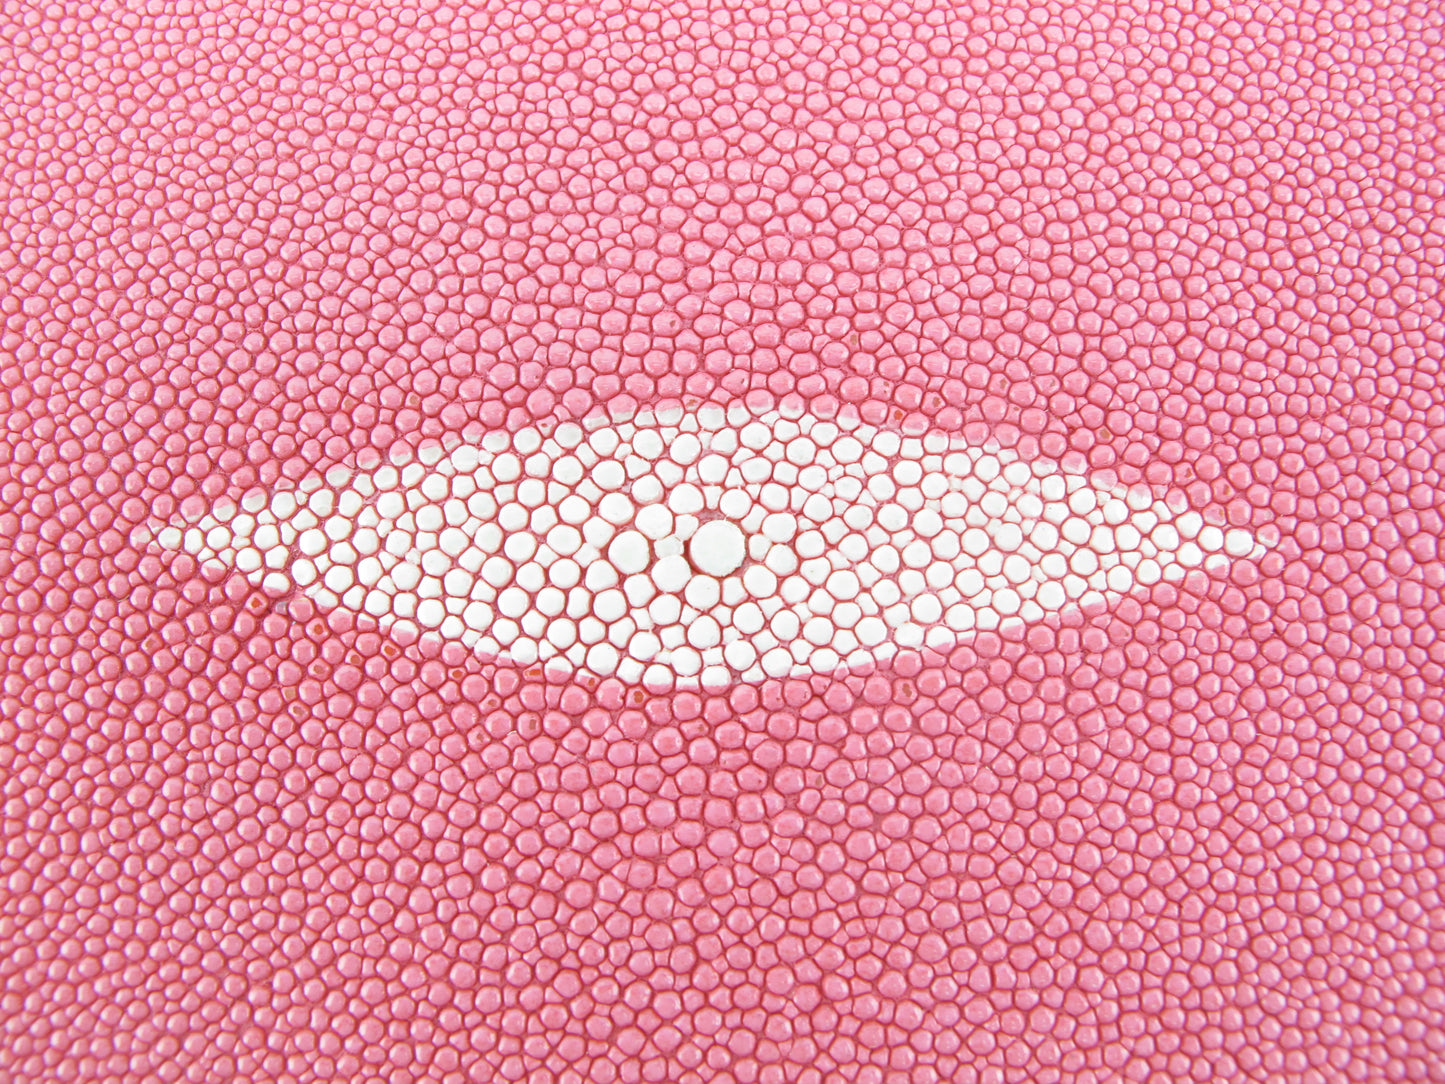 Genuine Stingray Skin Leather Round Shape Hide Pelt Heather Pink